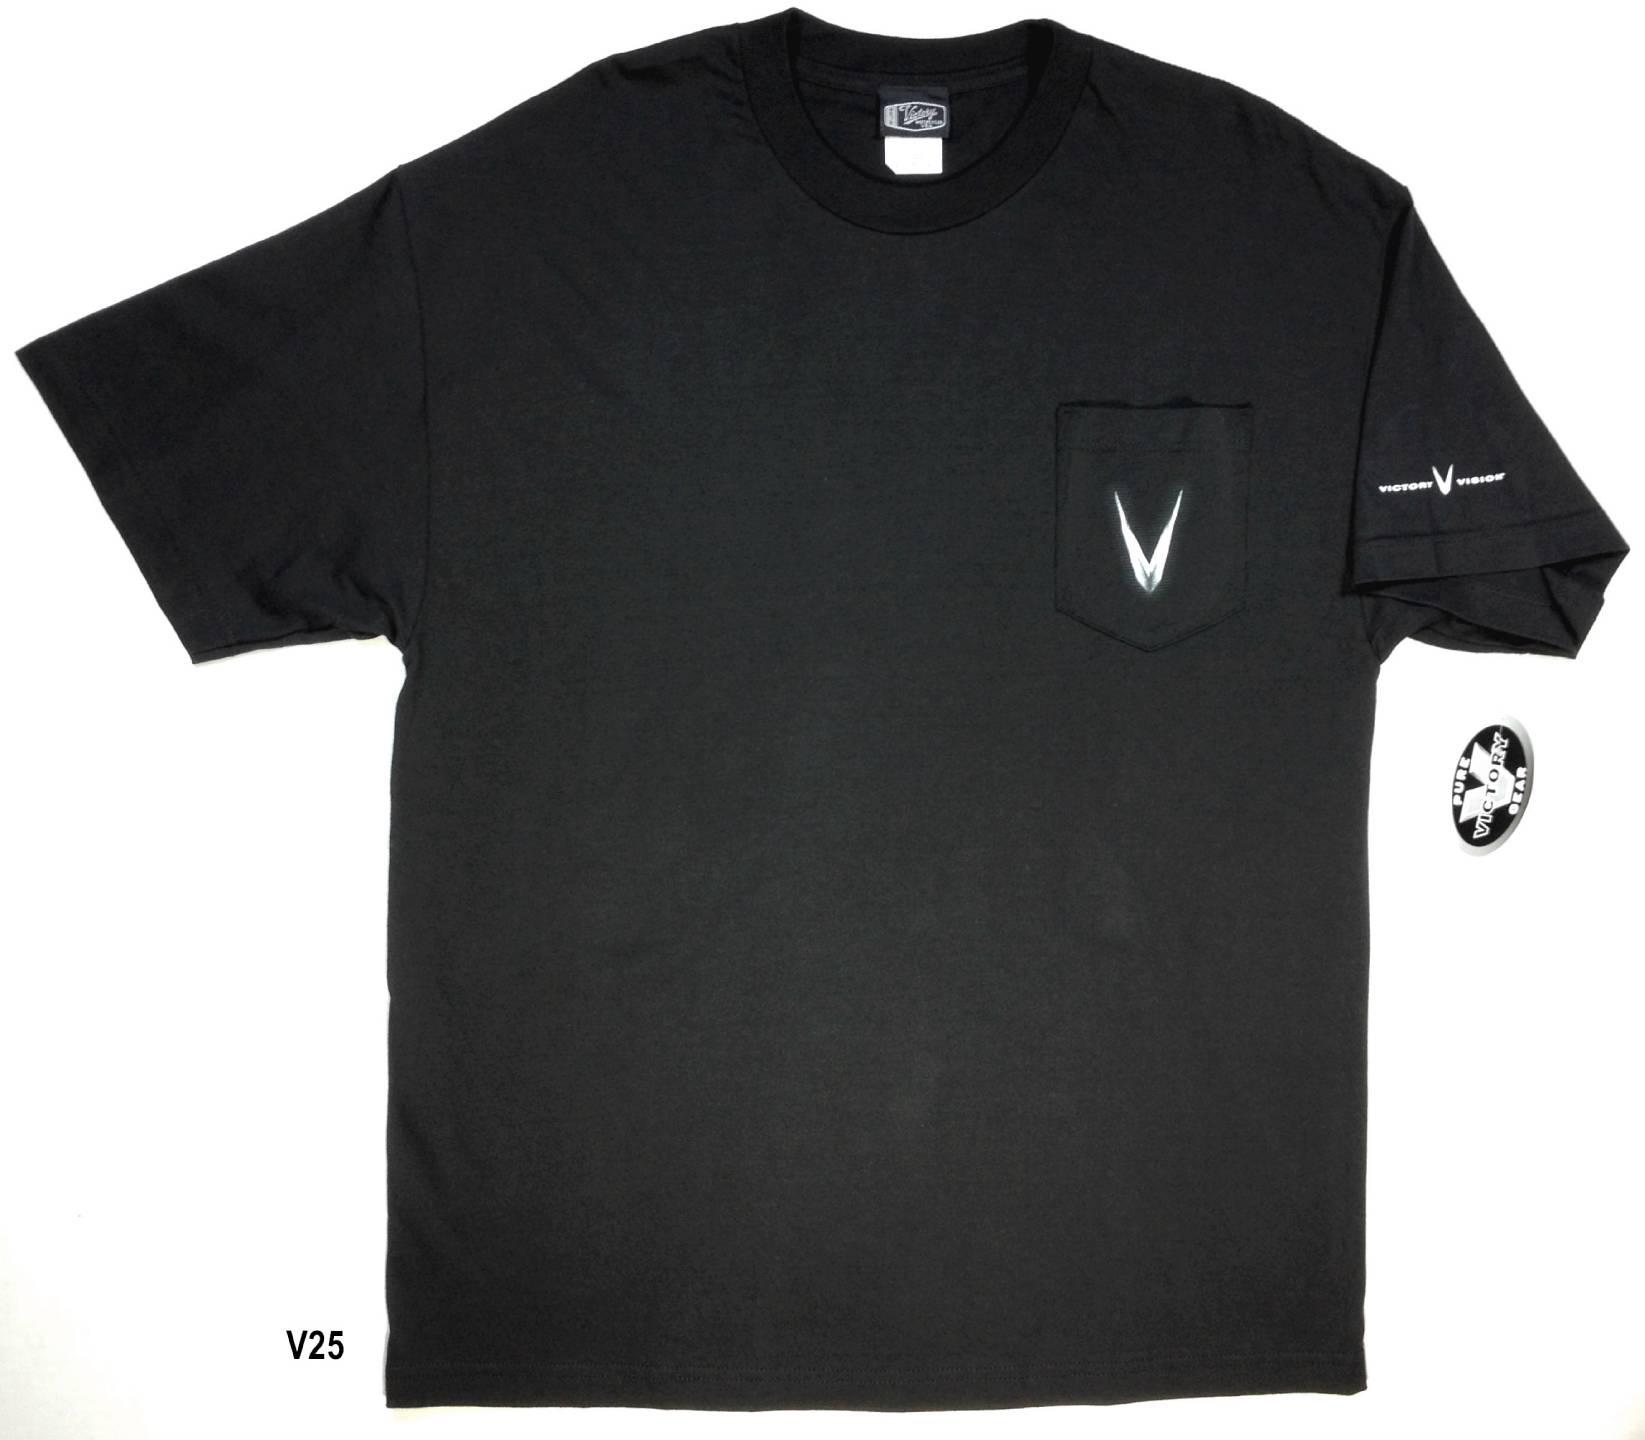 V25 - nwt victory motorcycle mens s/s t shirt black victory vision m,l,xl